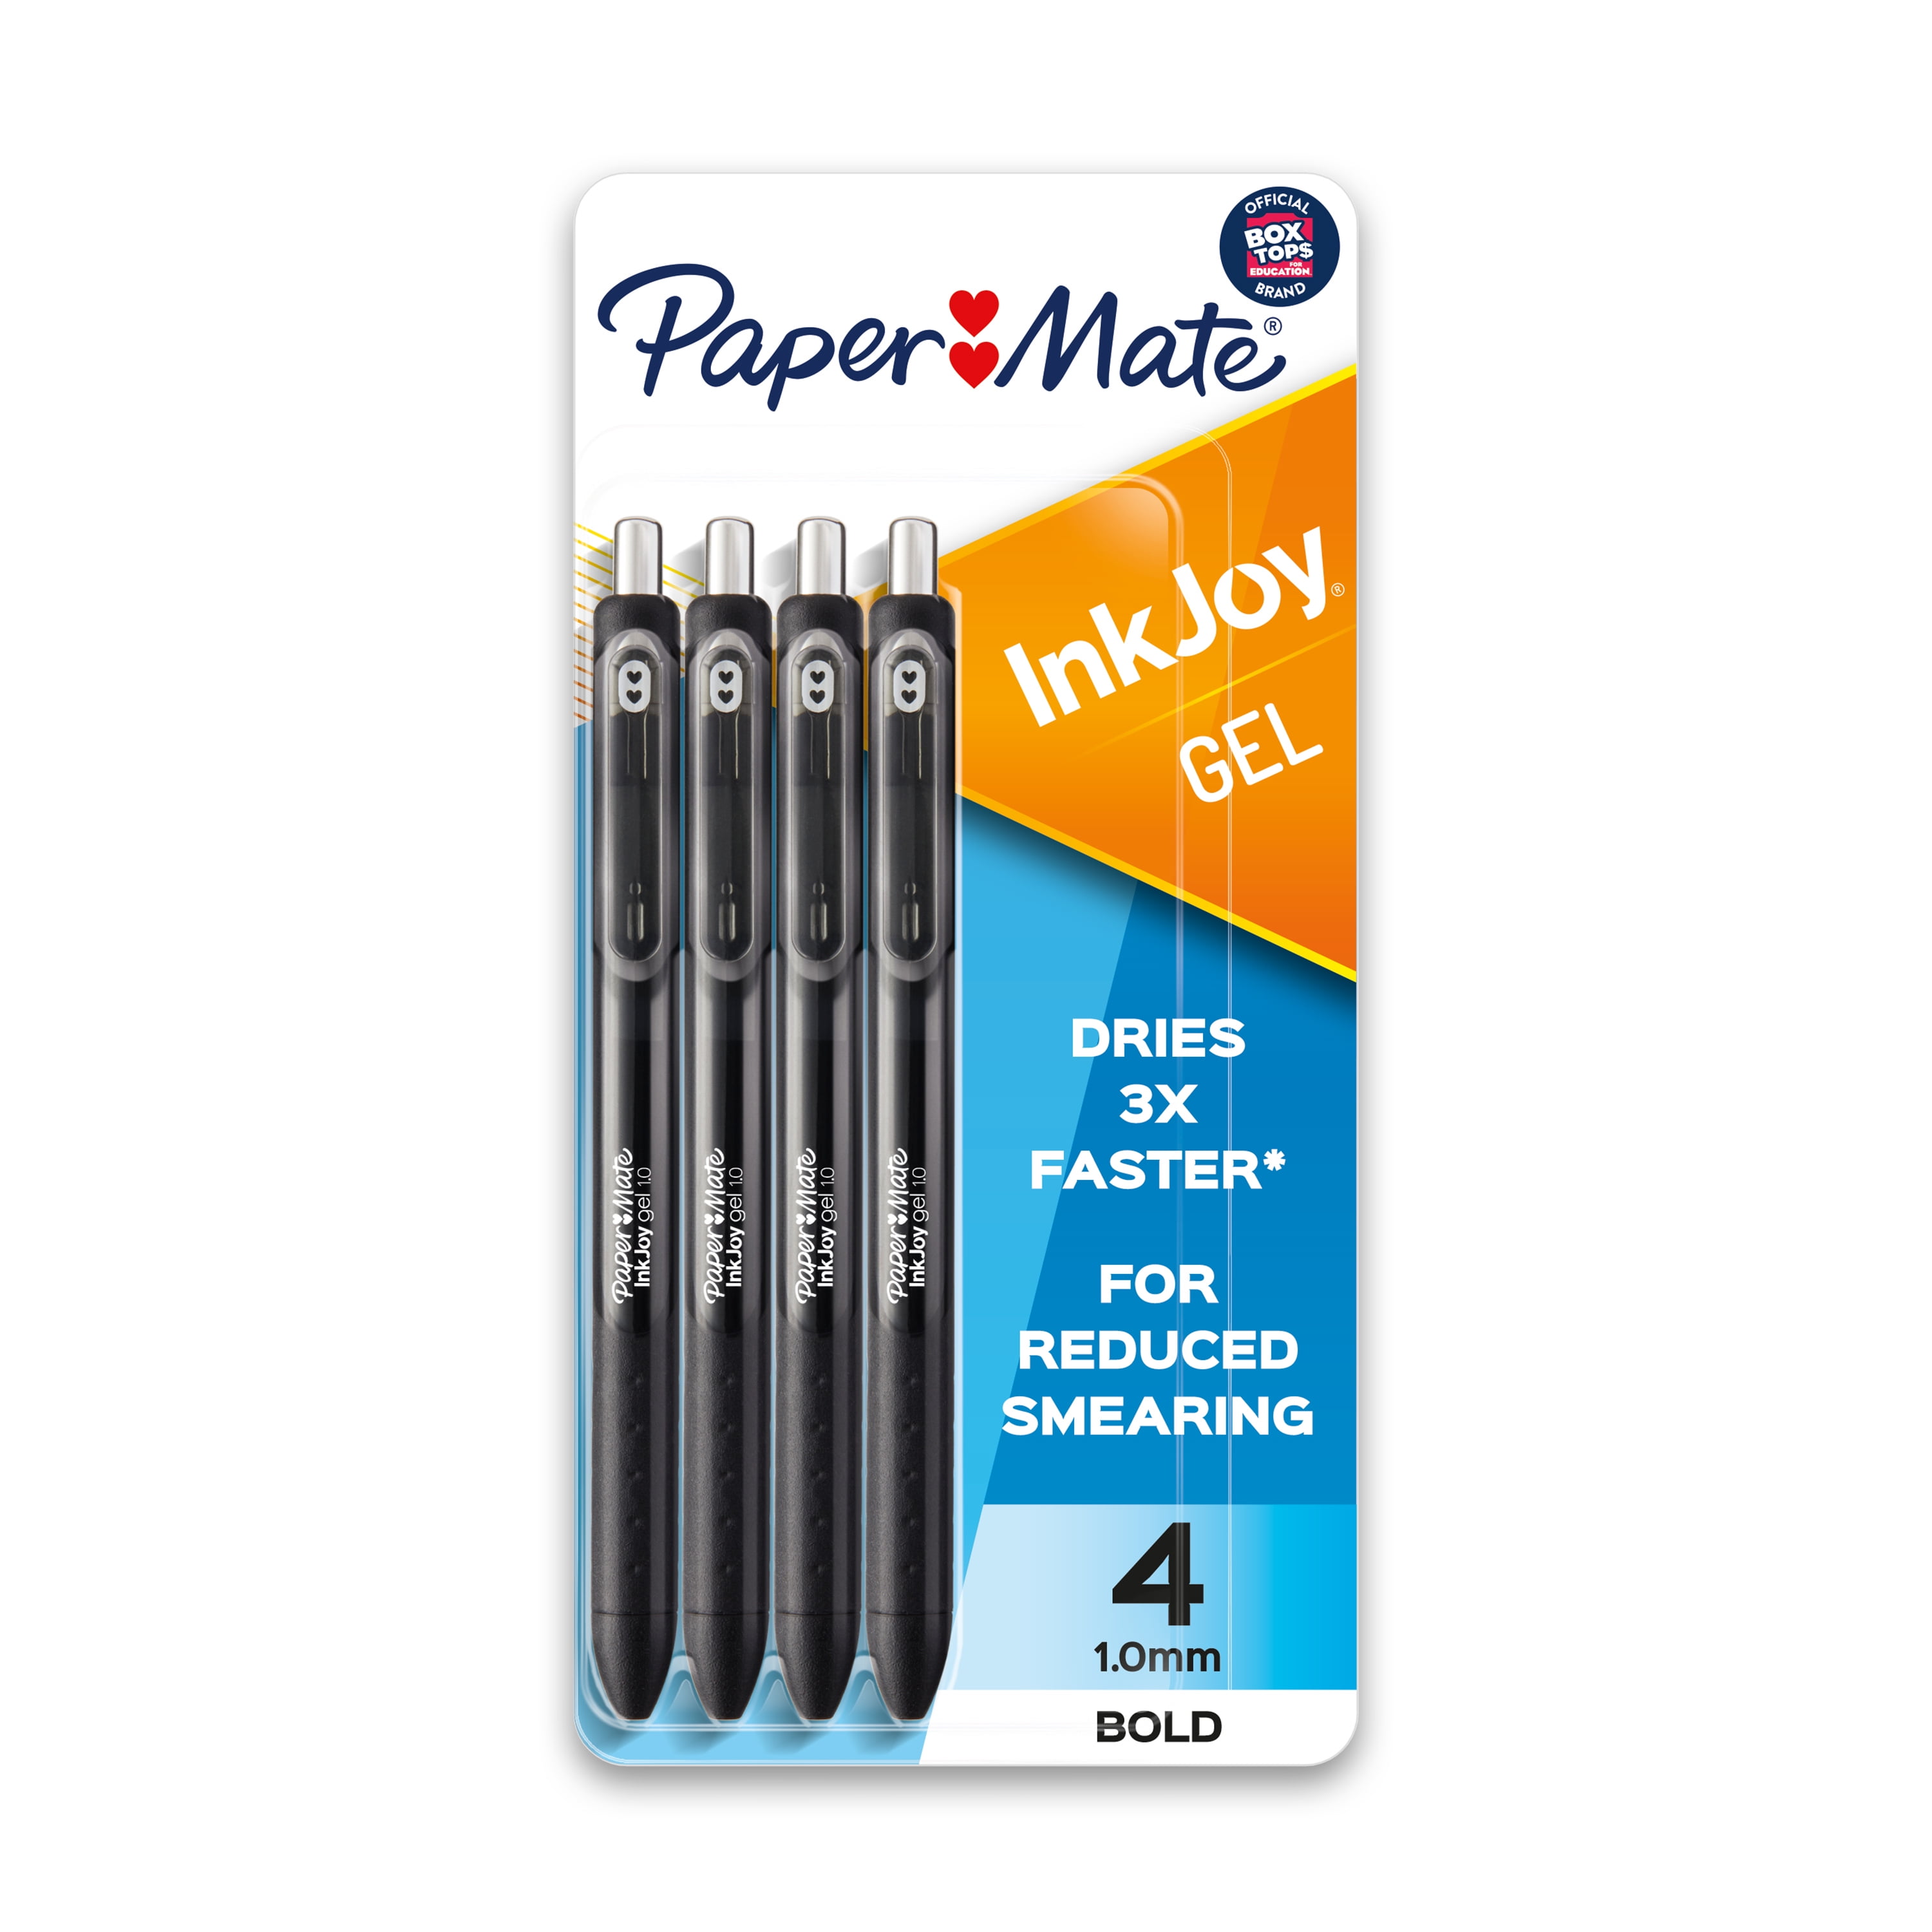 Review: Black Gel Pen Collection  Best Black Pen for Note-taking